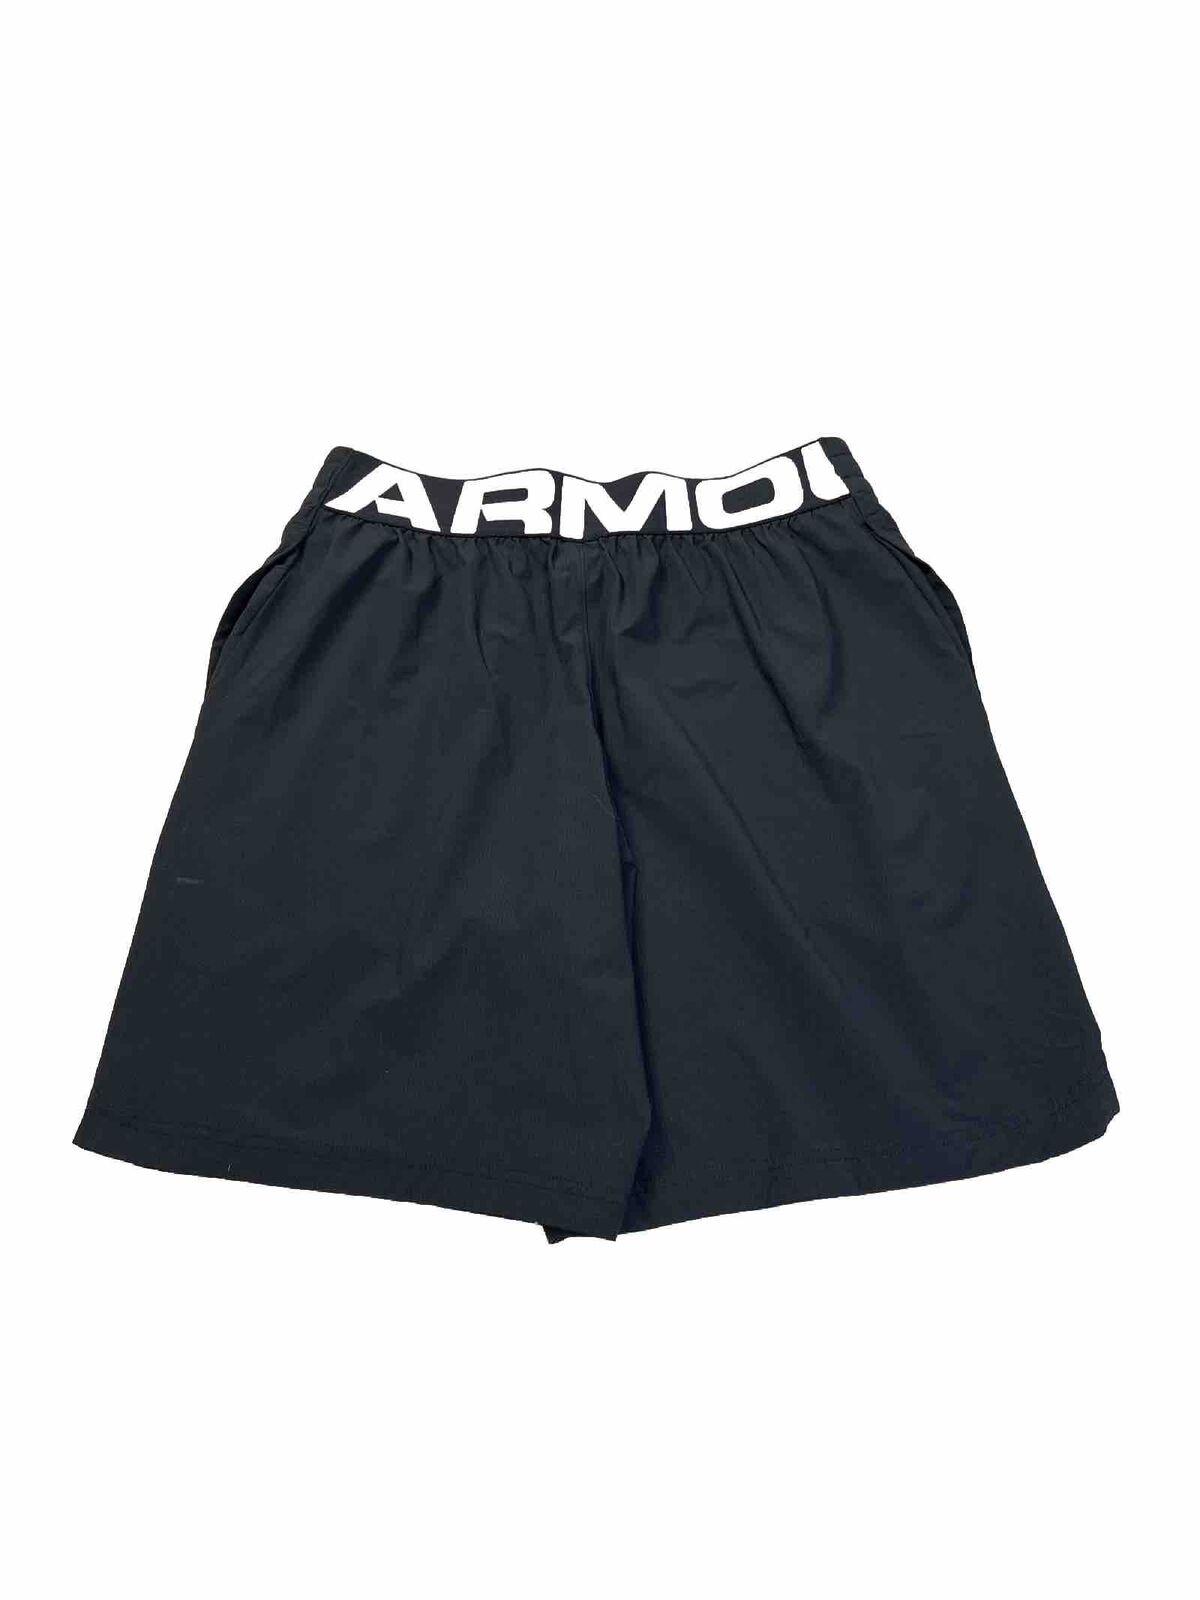 Under Armour Men's Black Lightweight Athletic Shorts - L